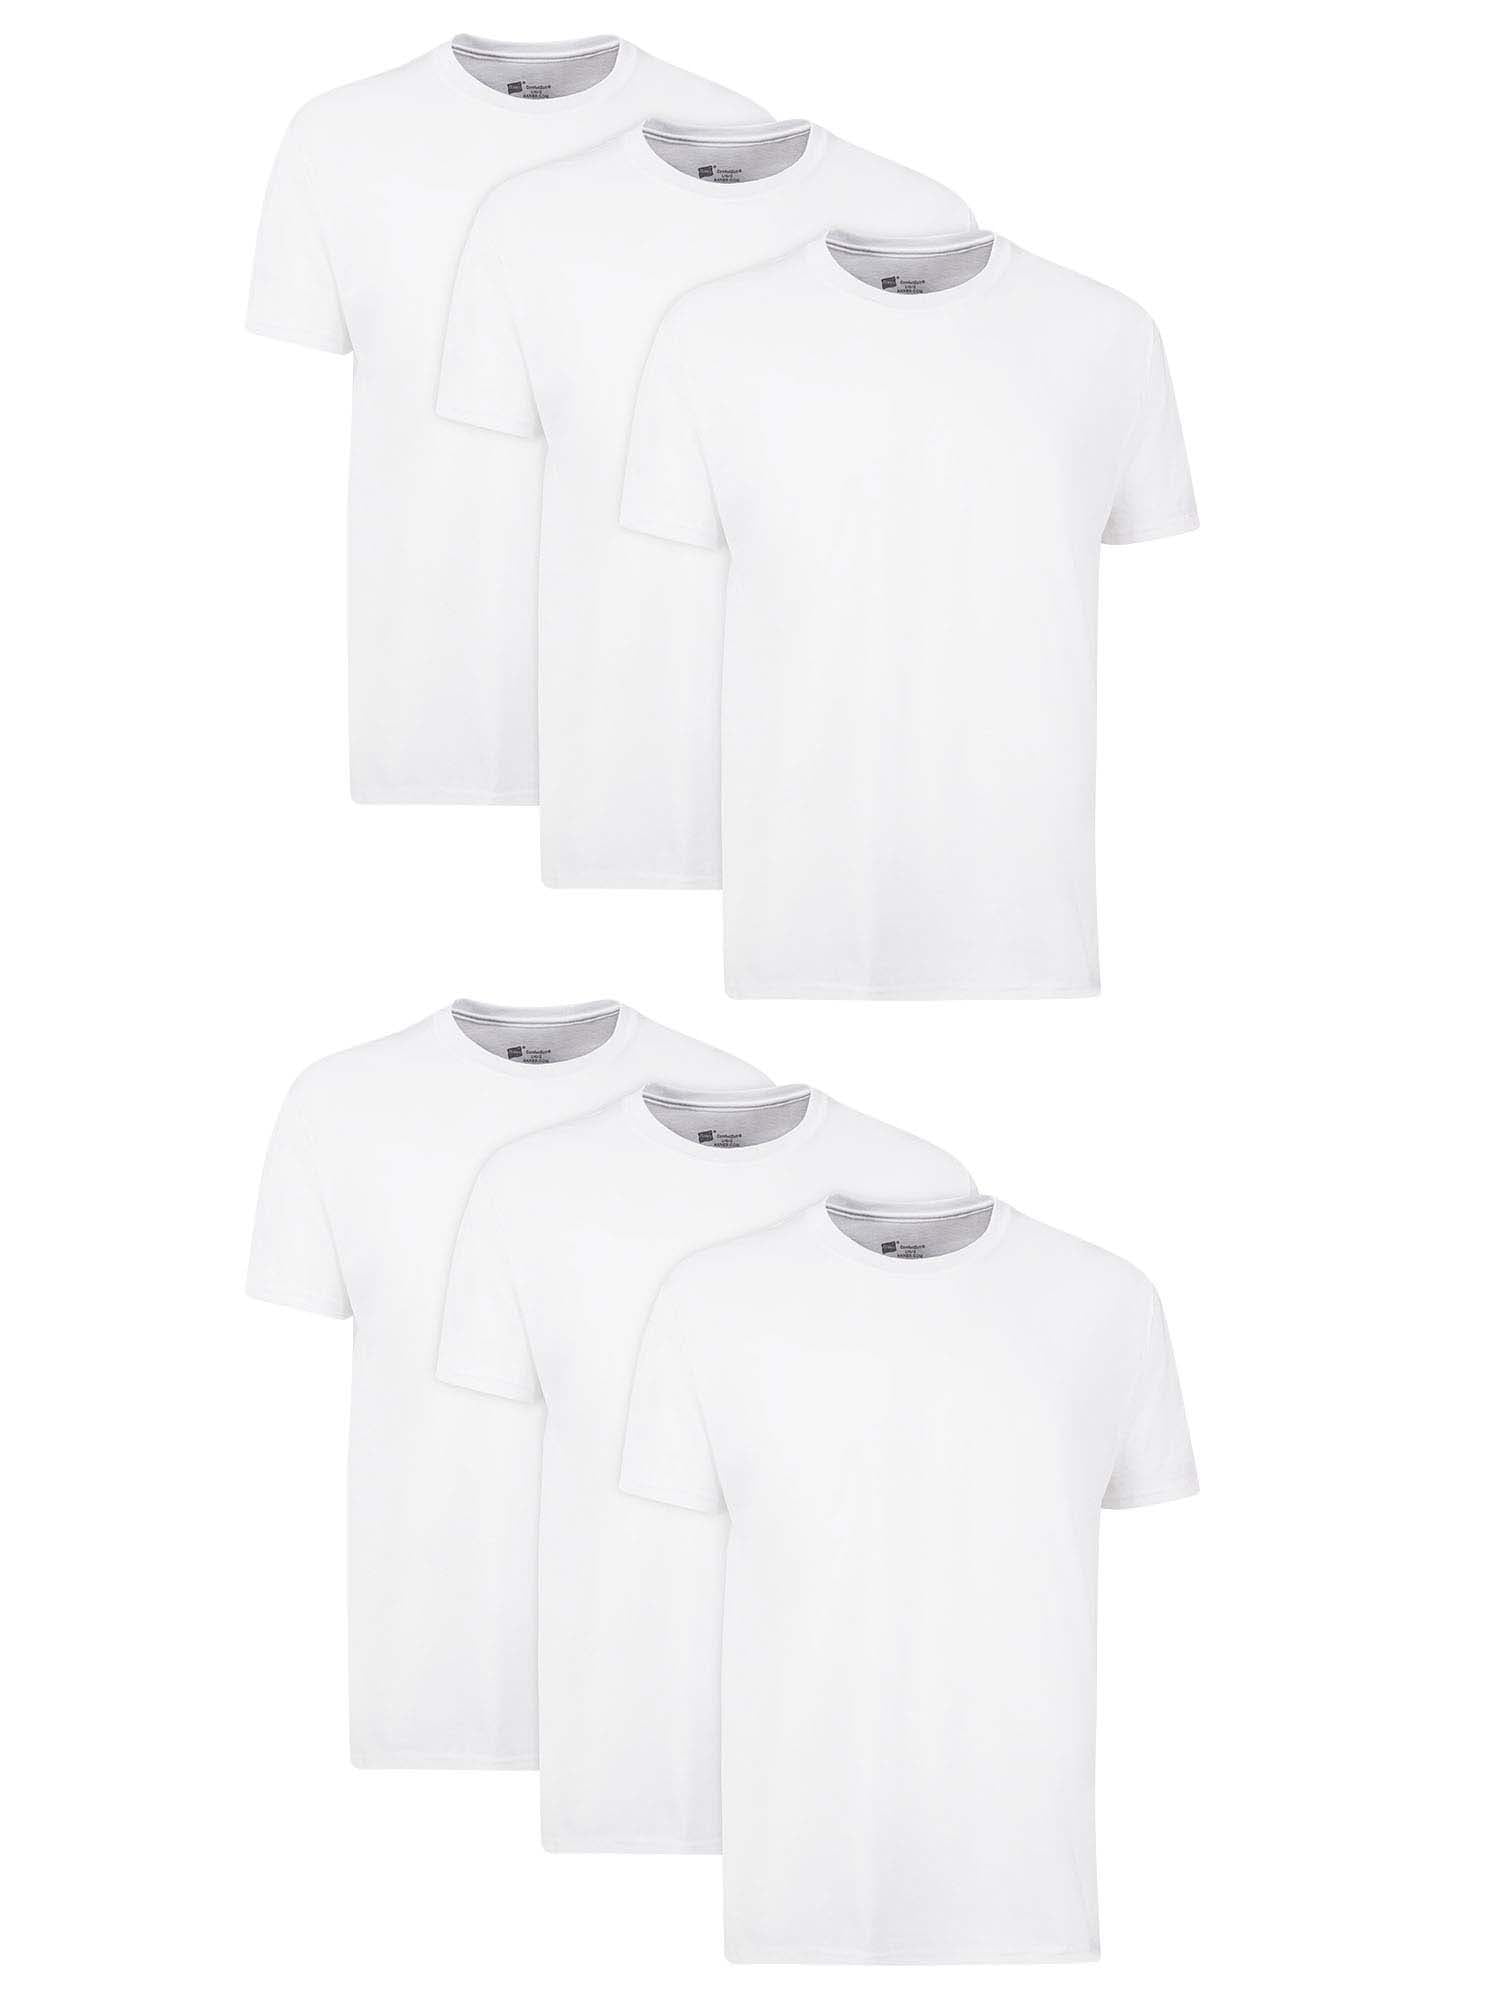 American Girl Kit Size Large White Promo Movie Star Tshirt Shirt T-shirt for sale online 